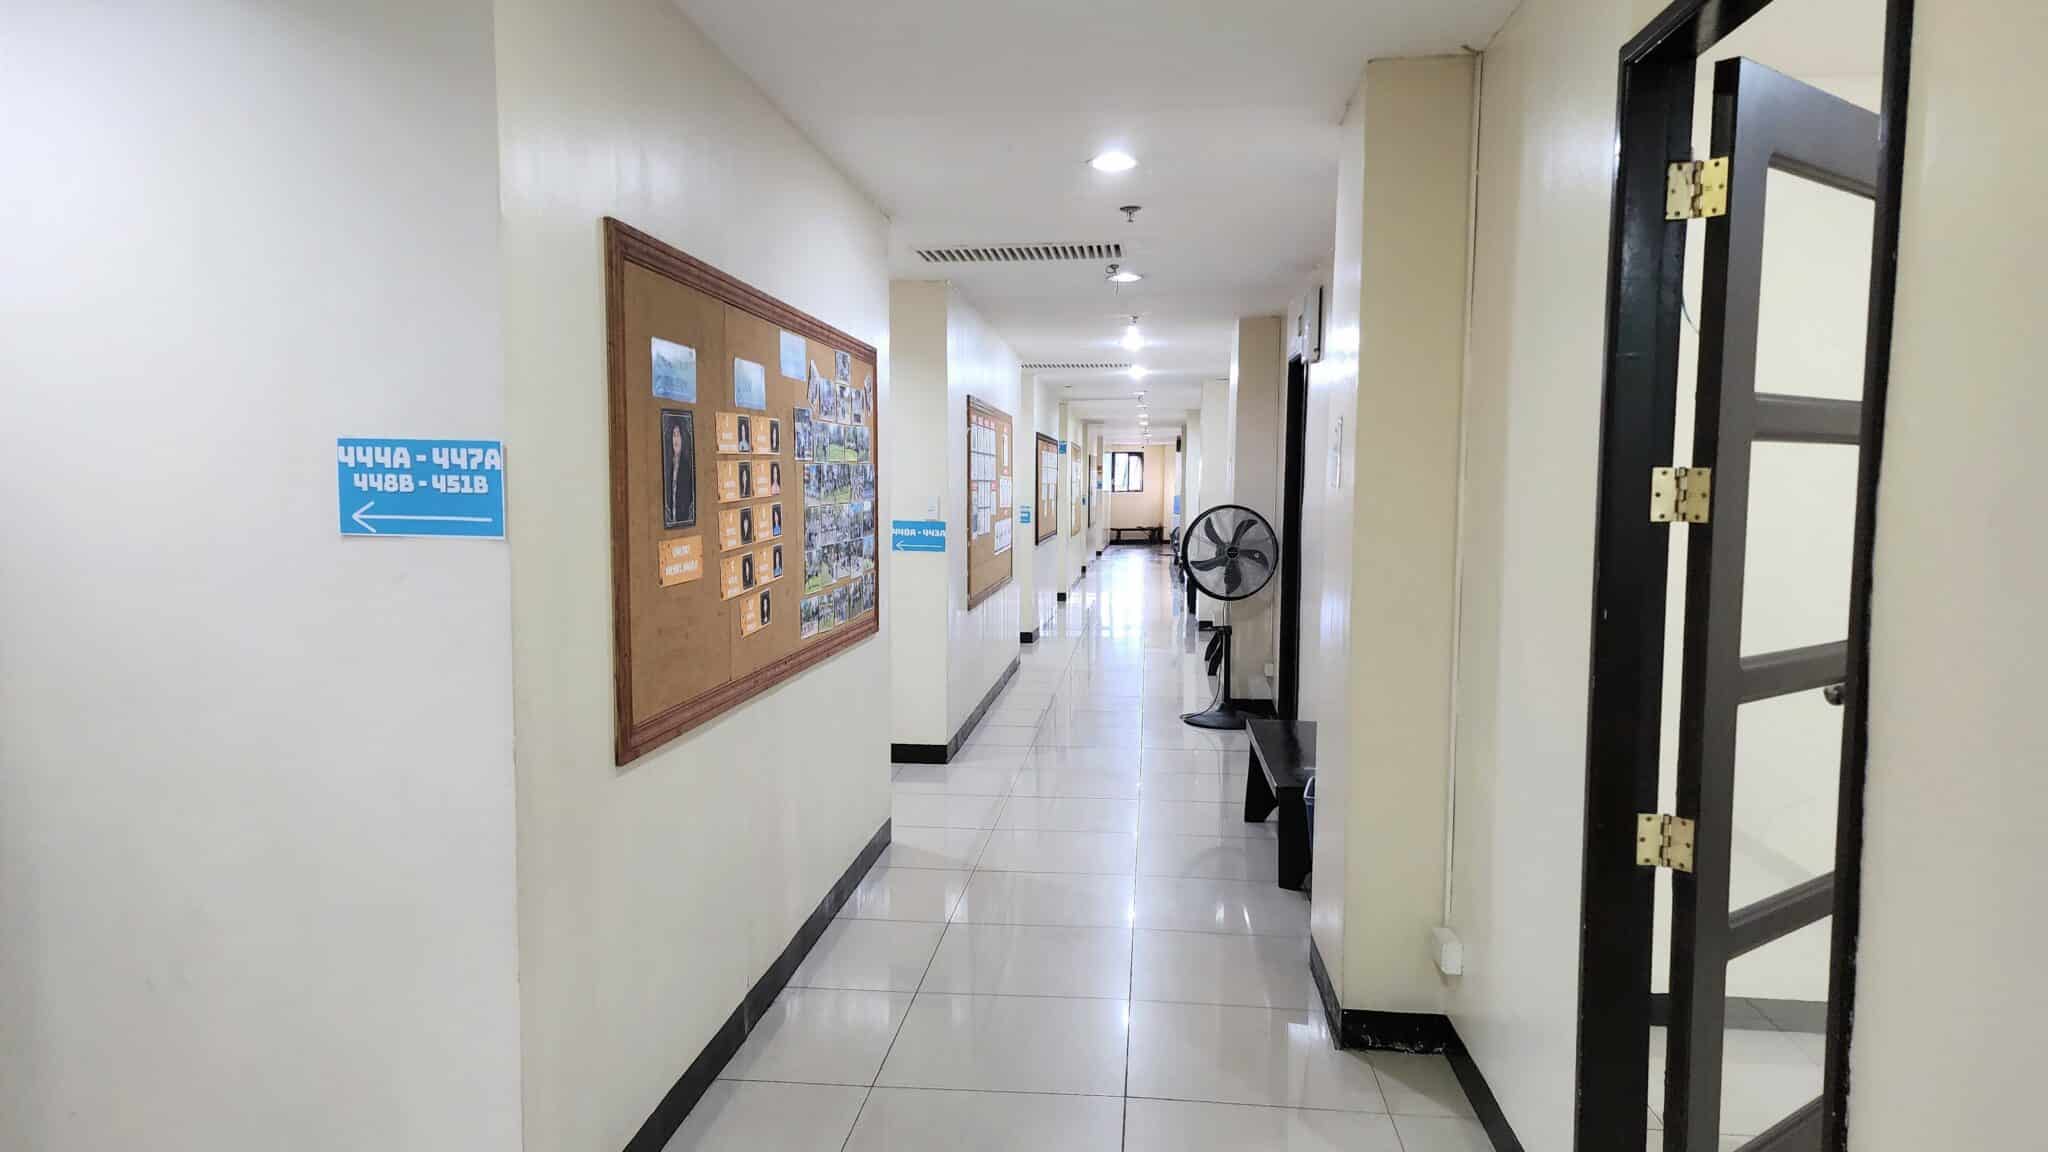 PINES語言學校main校區教室走廊